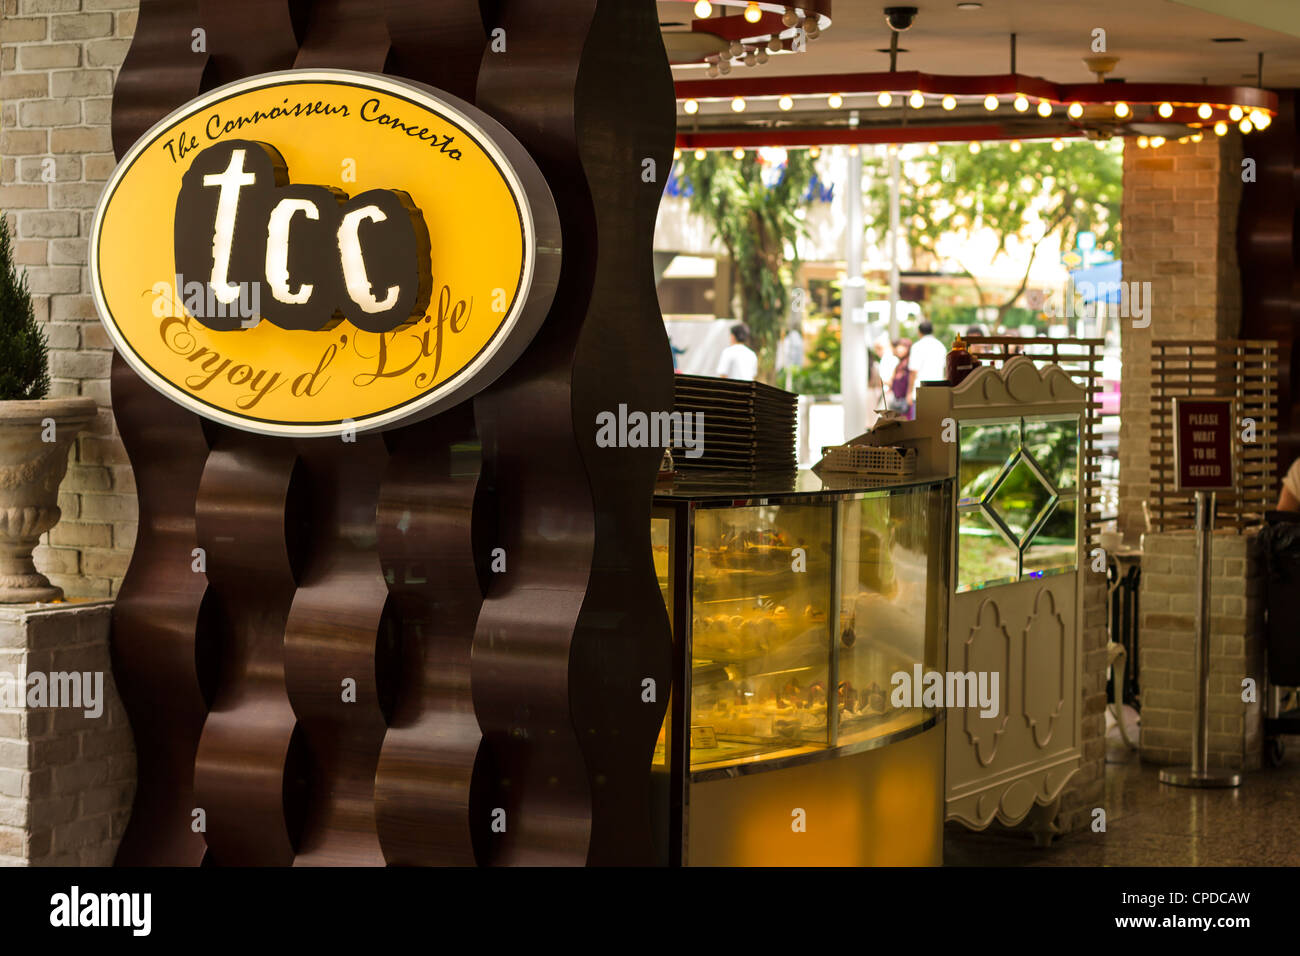 Der Kenner Concerto (Tcc) Kaffee-Haus am Orchard Road Singapur Stockfoto